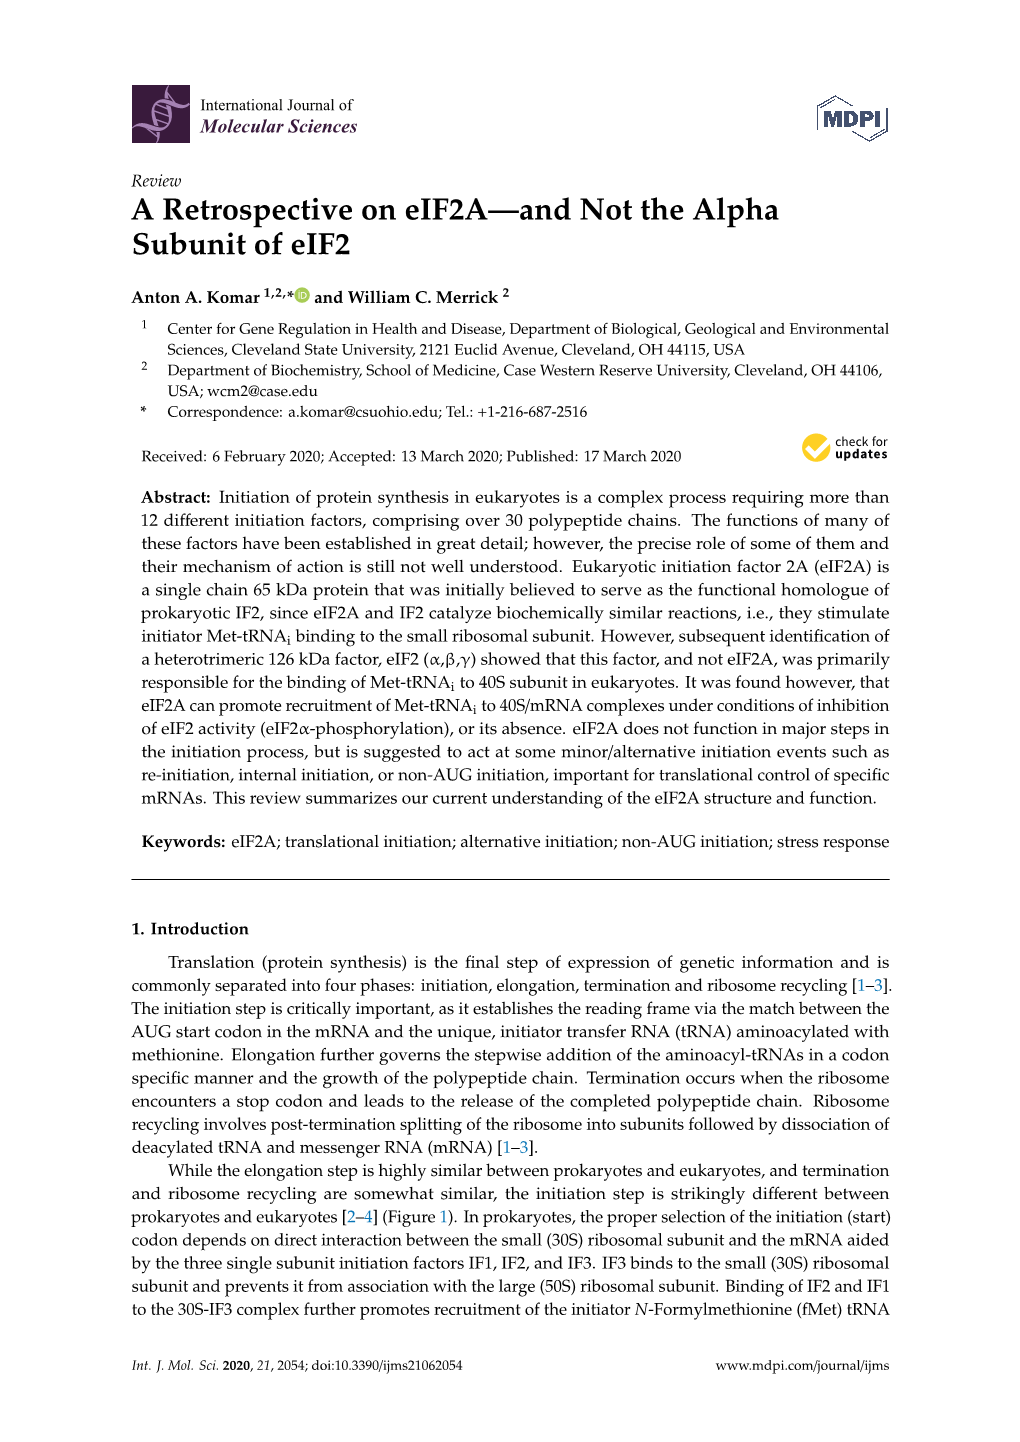 A Retrospective on Eif2a—And Not the Alpha Subunit of Eif2